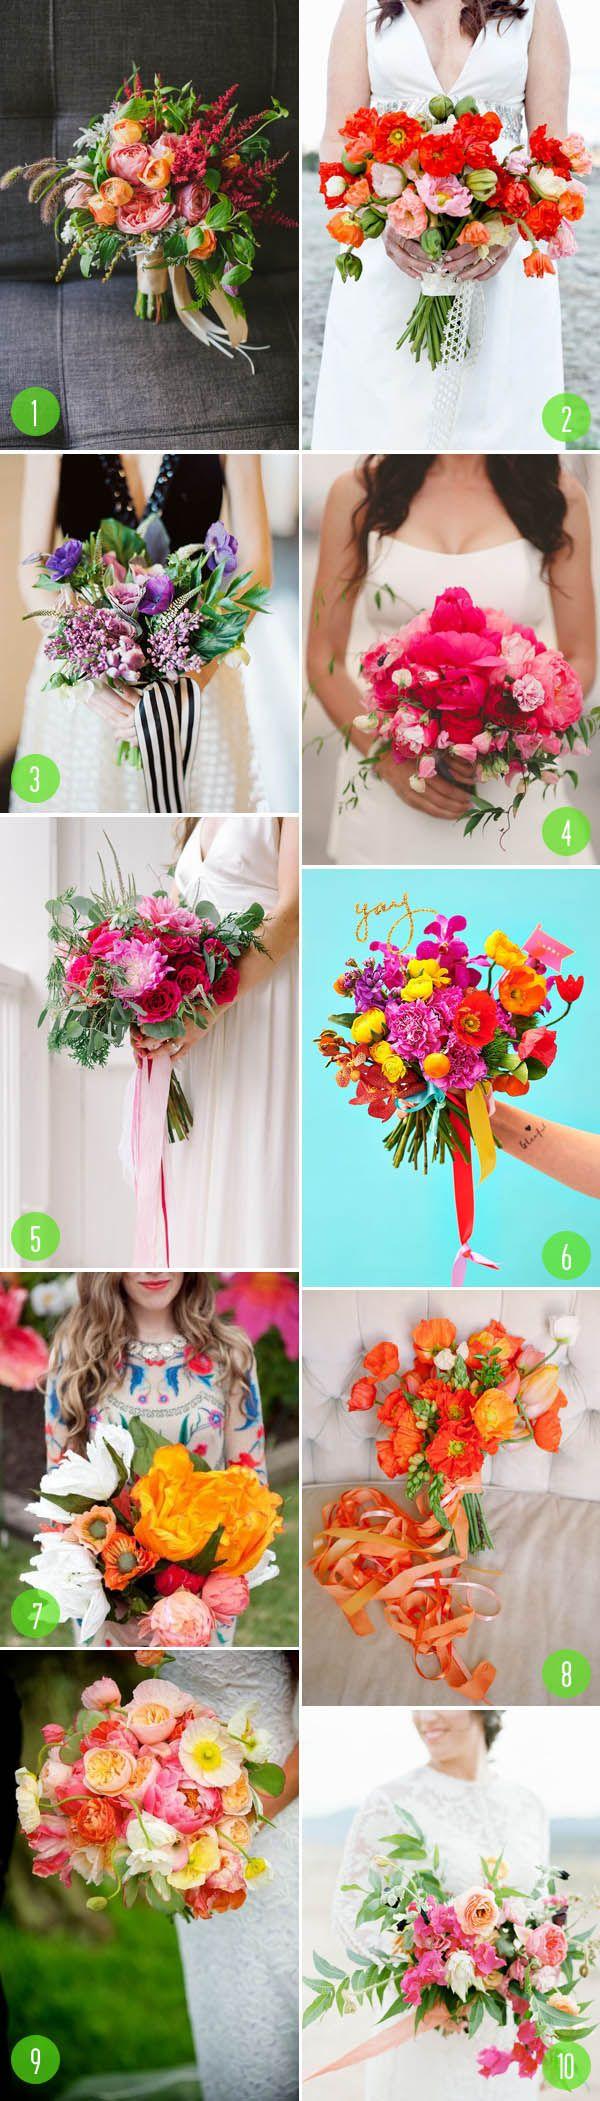 زفاف - Top 10: Bright Bouquets